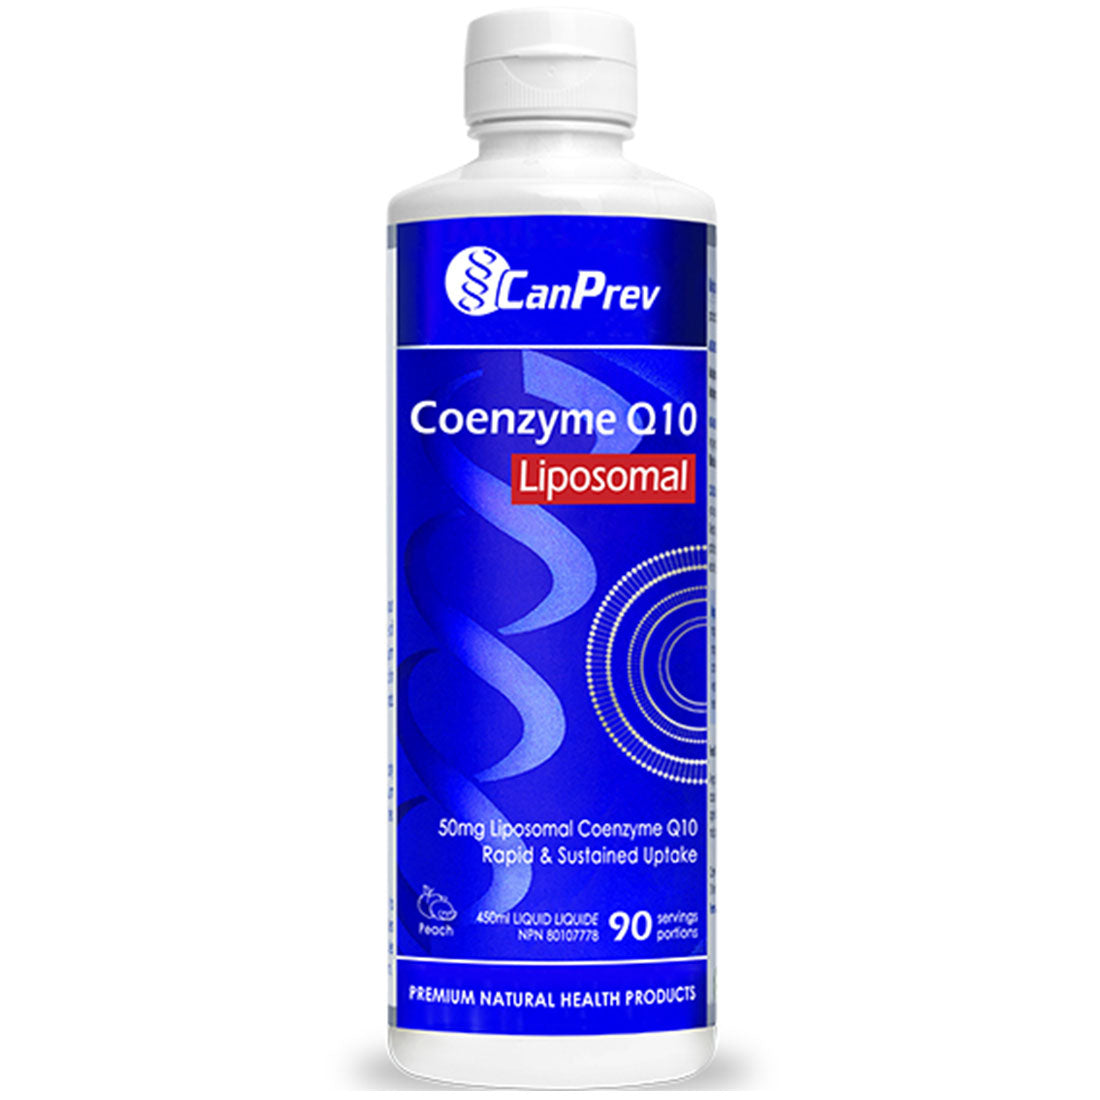 CanPrev Coenzyme Q10 Liposomal, 450ml